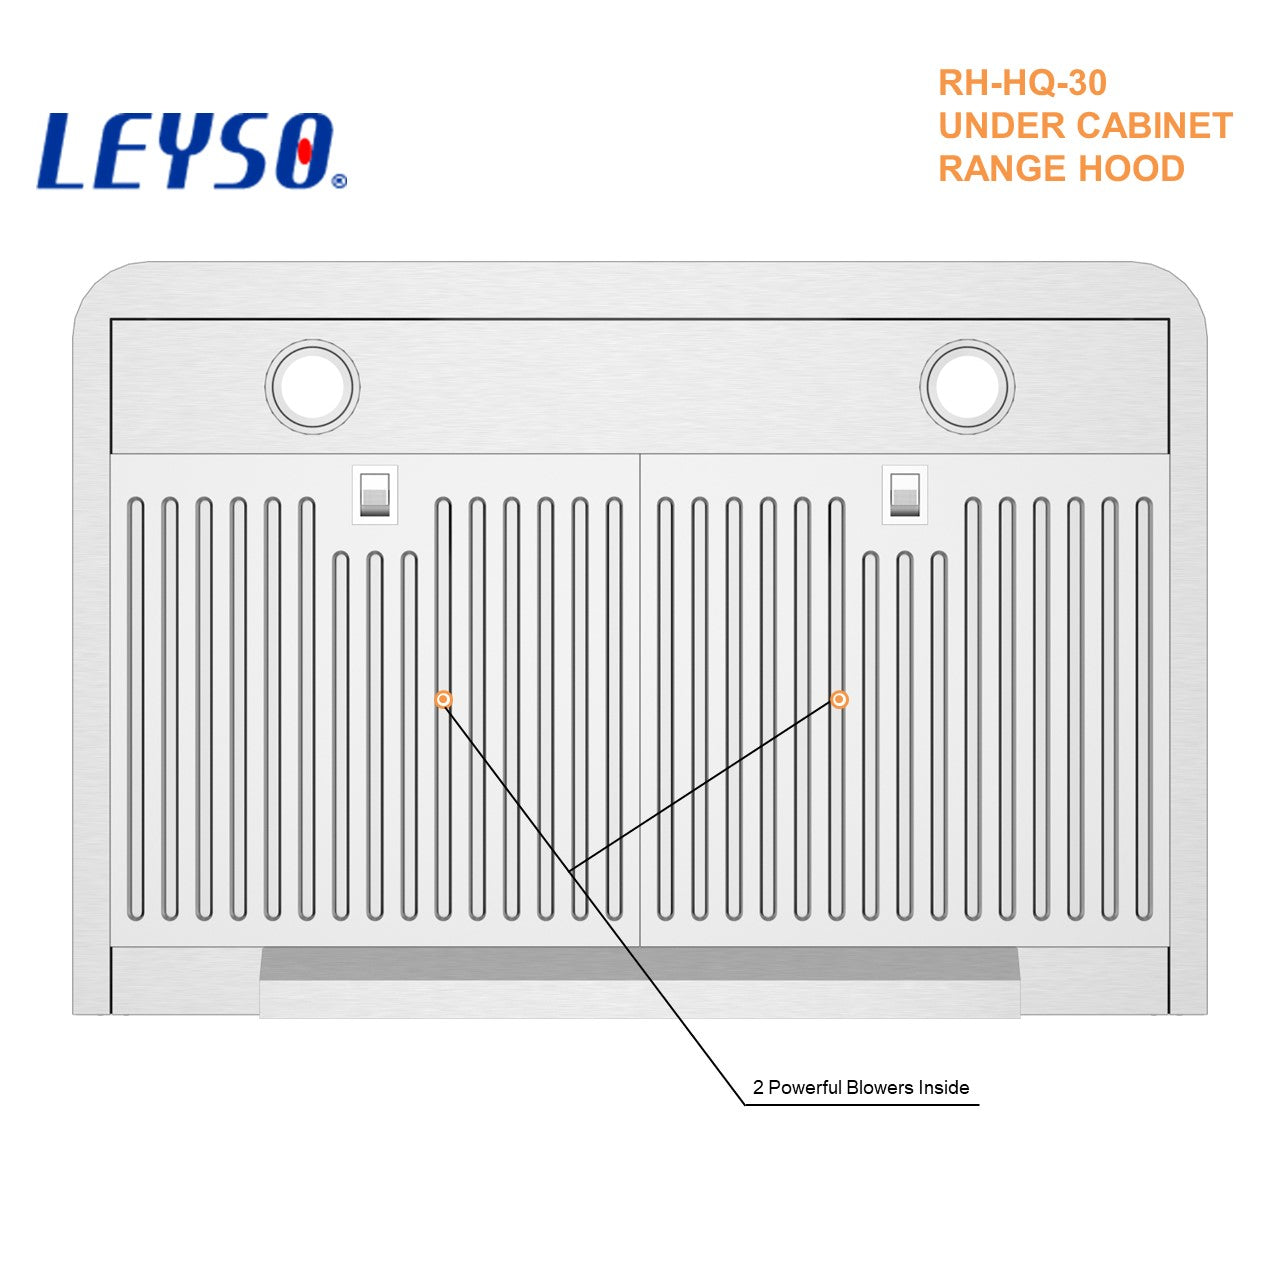 Leyso Simple 30" Under Cabinet Stainless Steel Range Hood, Digital 4-Speed Control, 900 CFM, 2 LED Lights, Baffle Filters